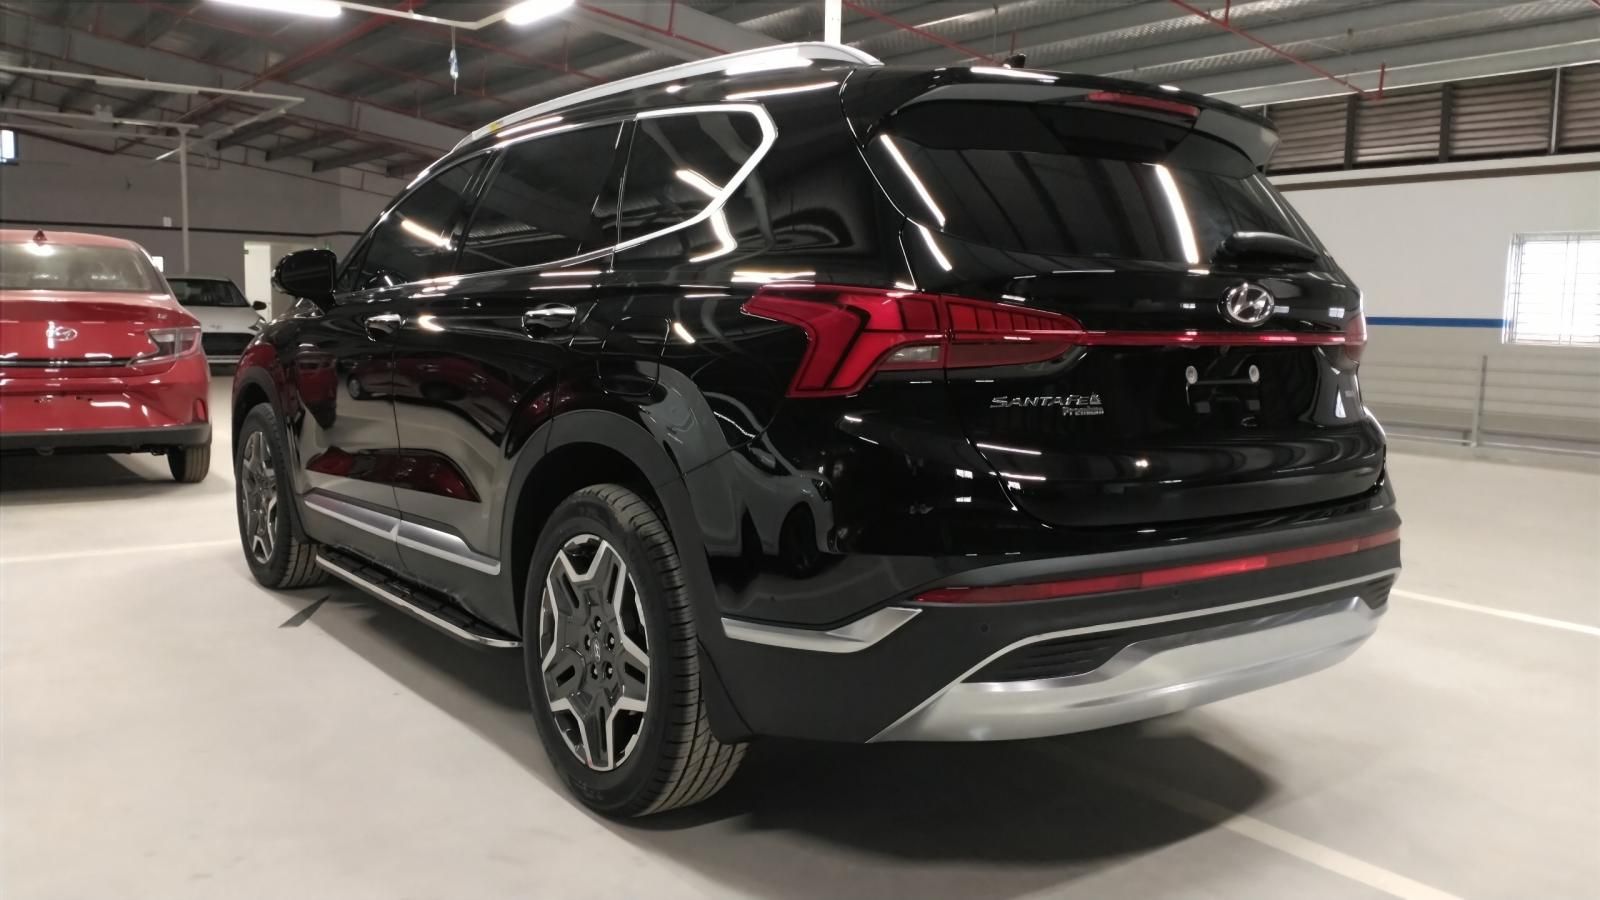 Hyundai Santa Fe 2022 - Ông Vua phân khúc SUV 7 chỗ